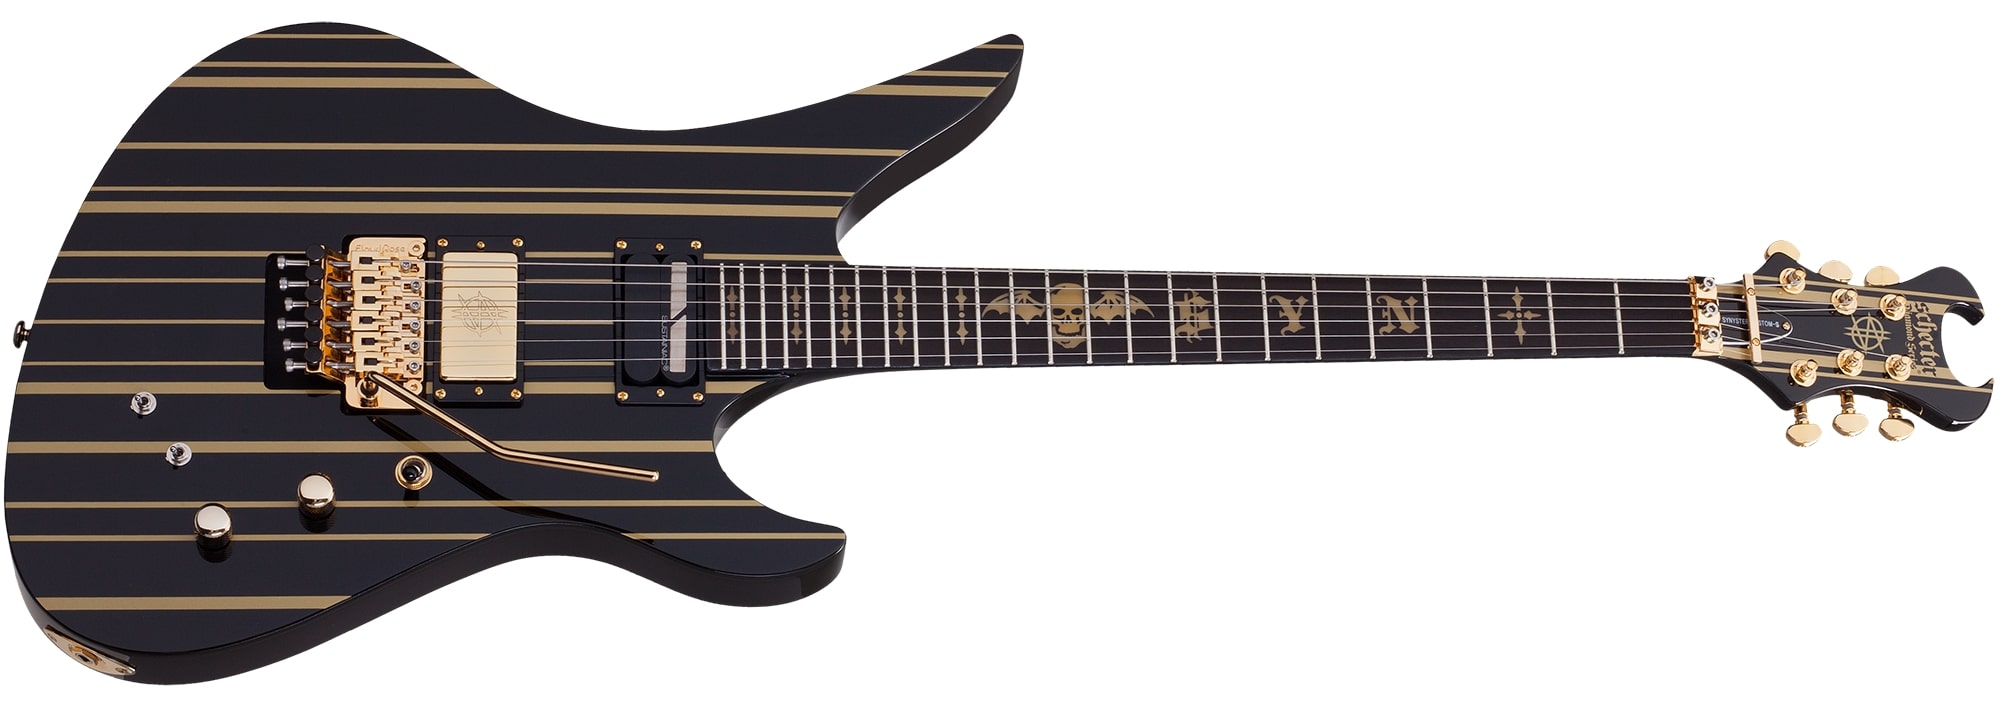 Schecter Synyster Gates Custom-S W/ SUSTAINIAC 6 String Electric Guitar Black Gold Stripes 1742-SHC